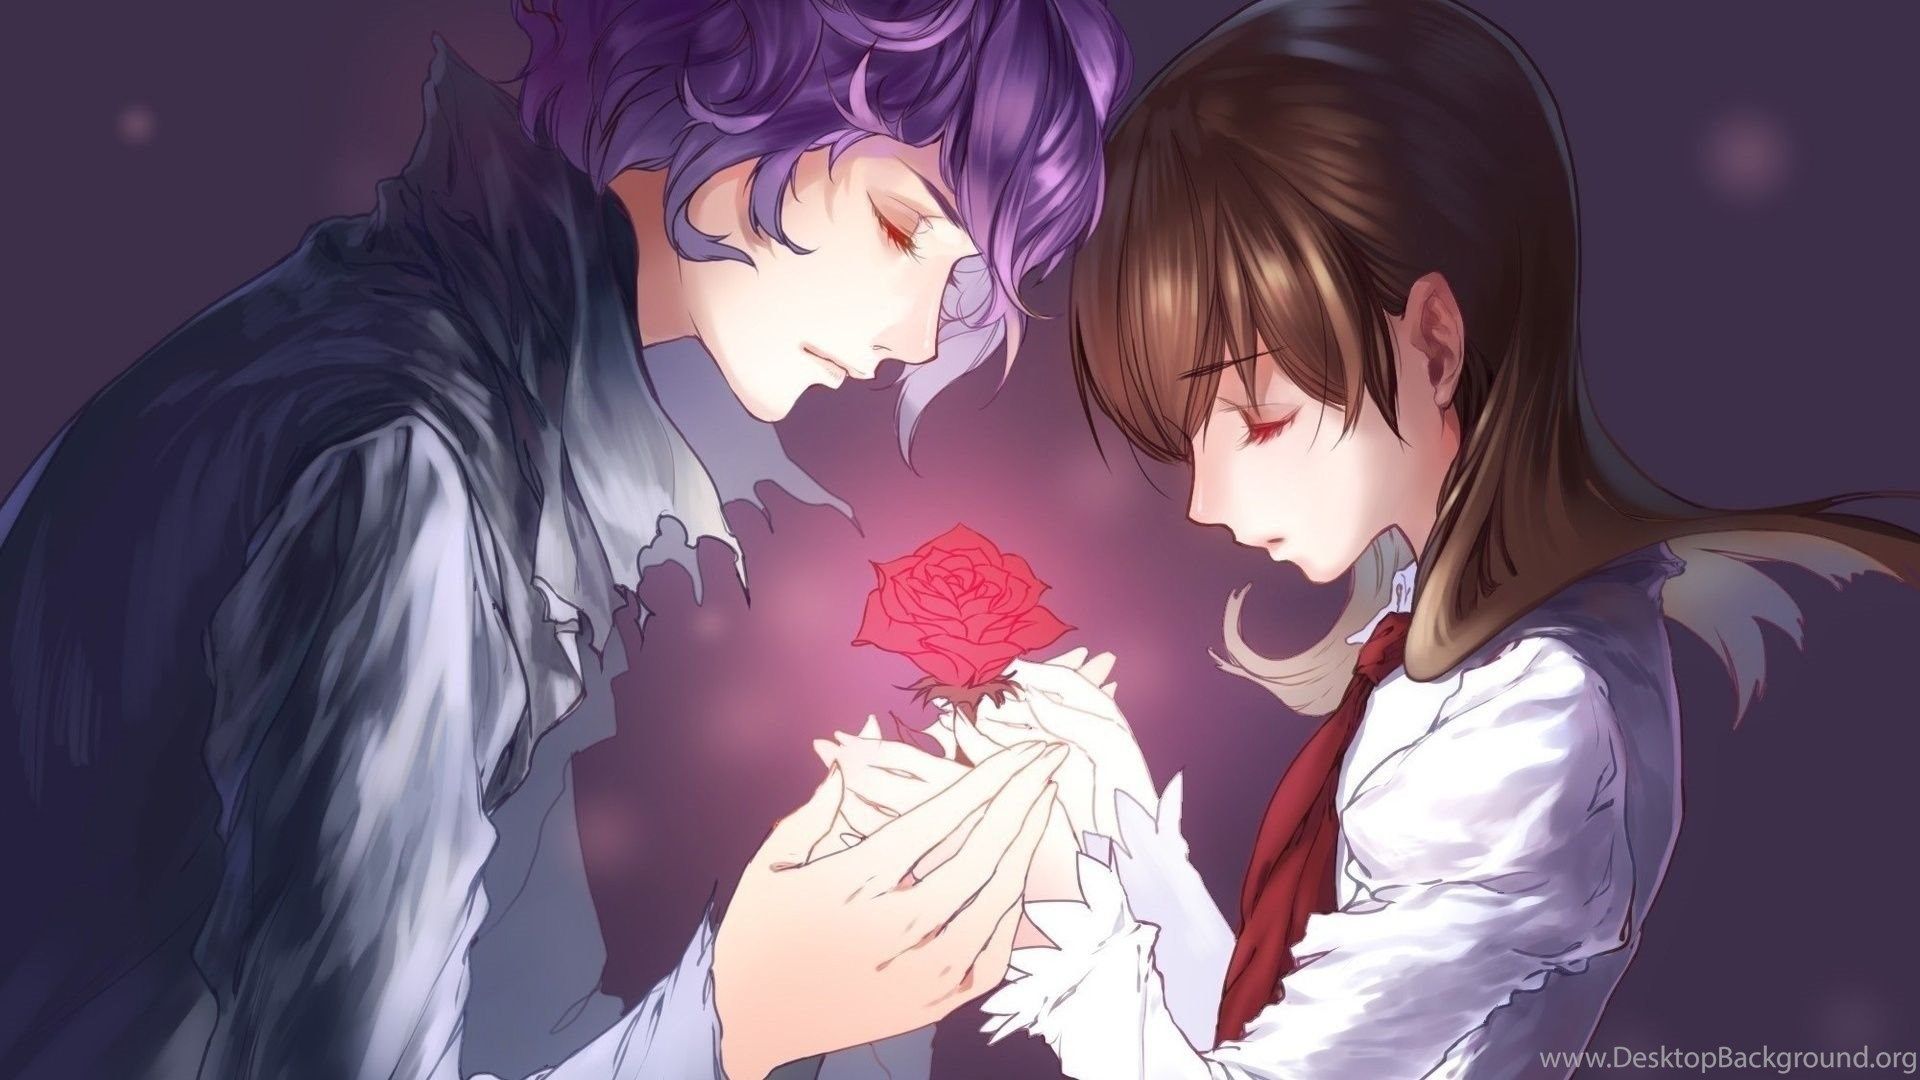 Animated Couple Flowers Love Anime Boy Girl Image Wallpaper